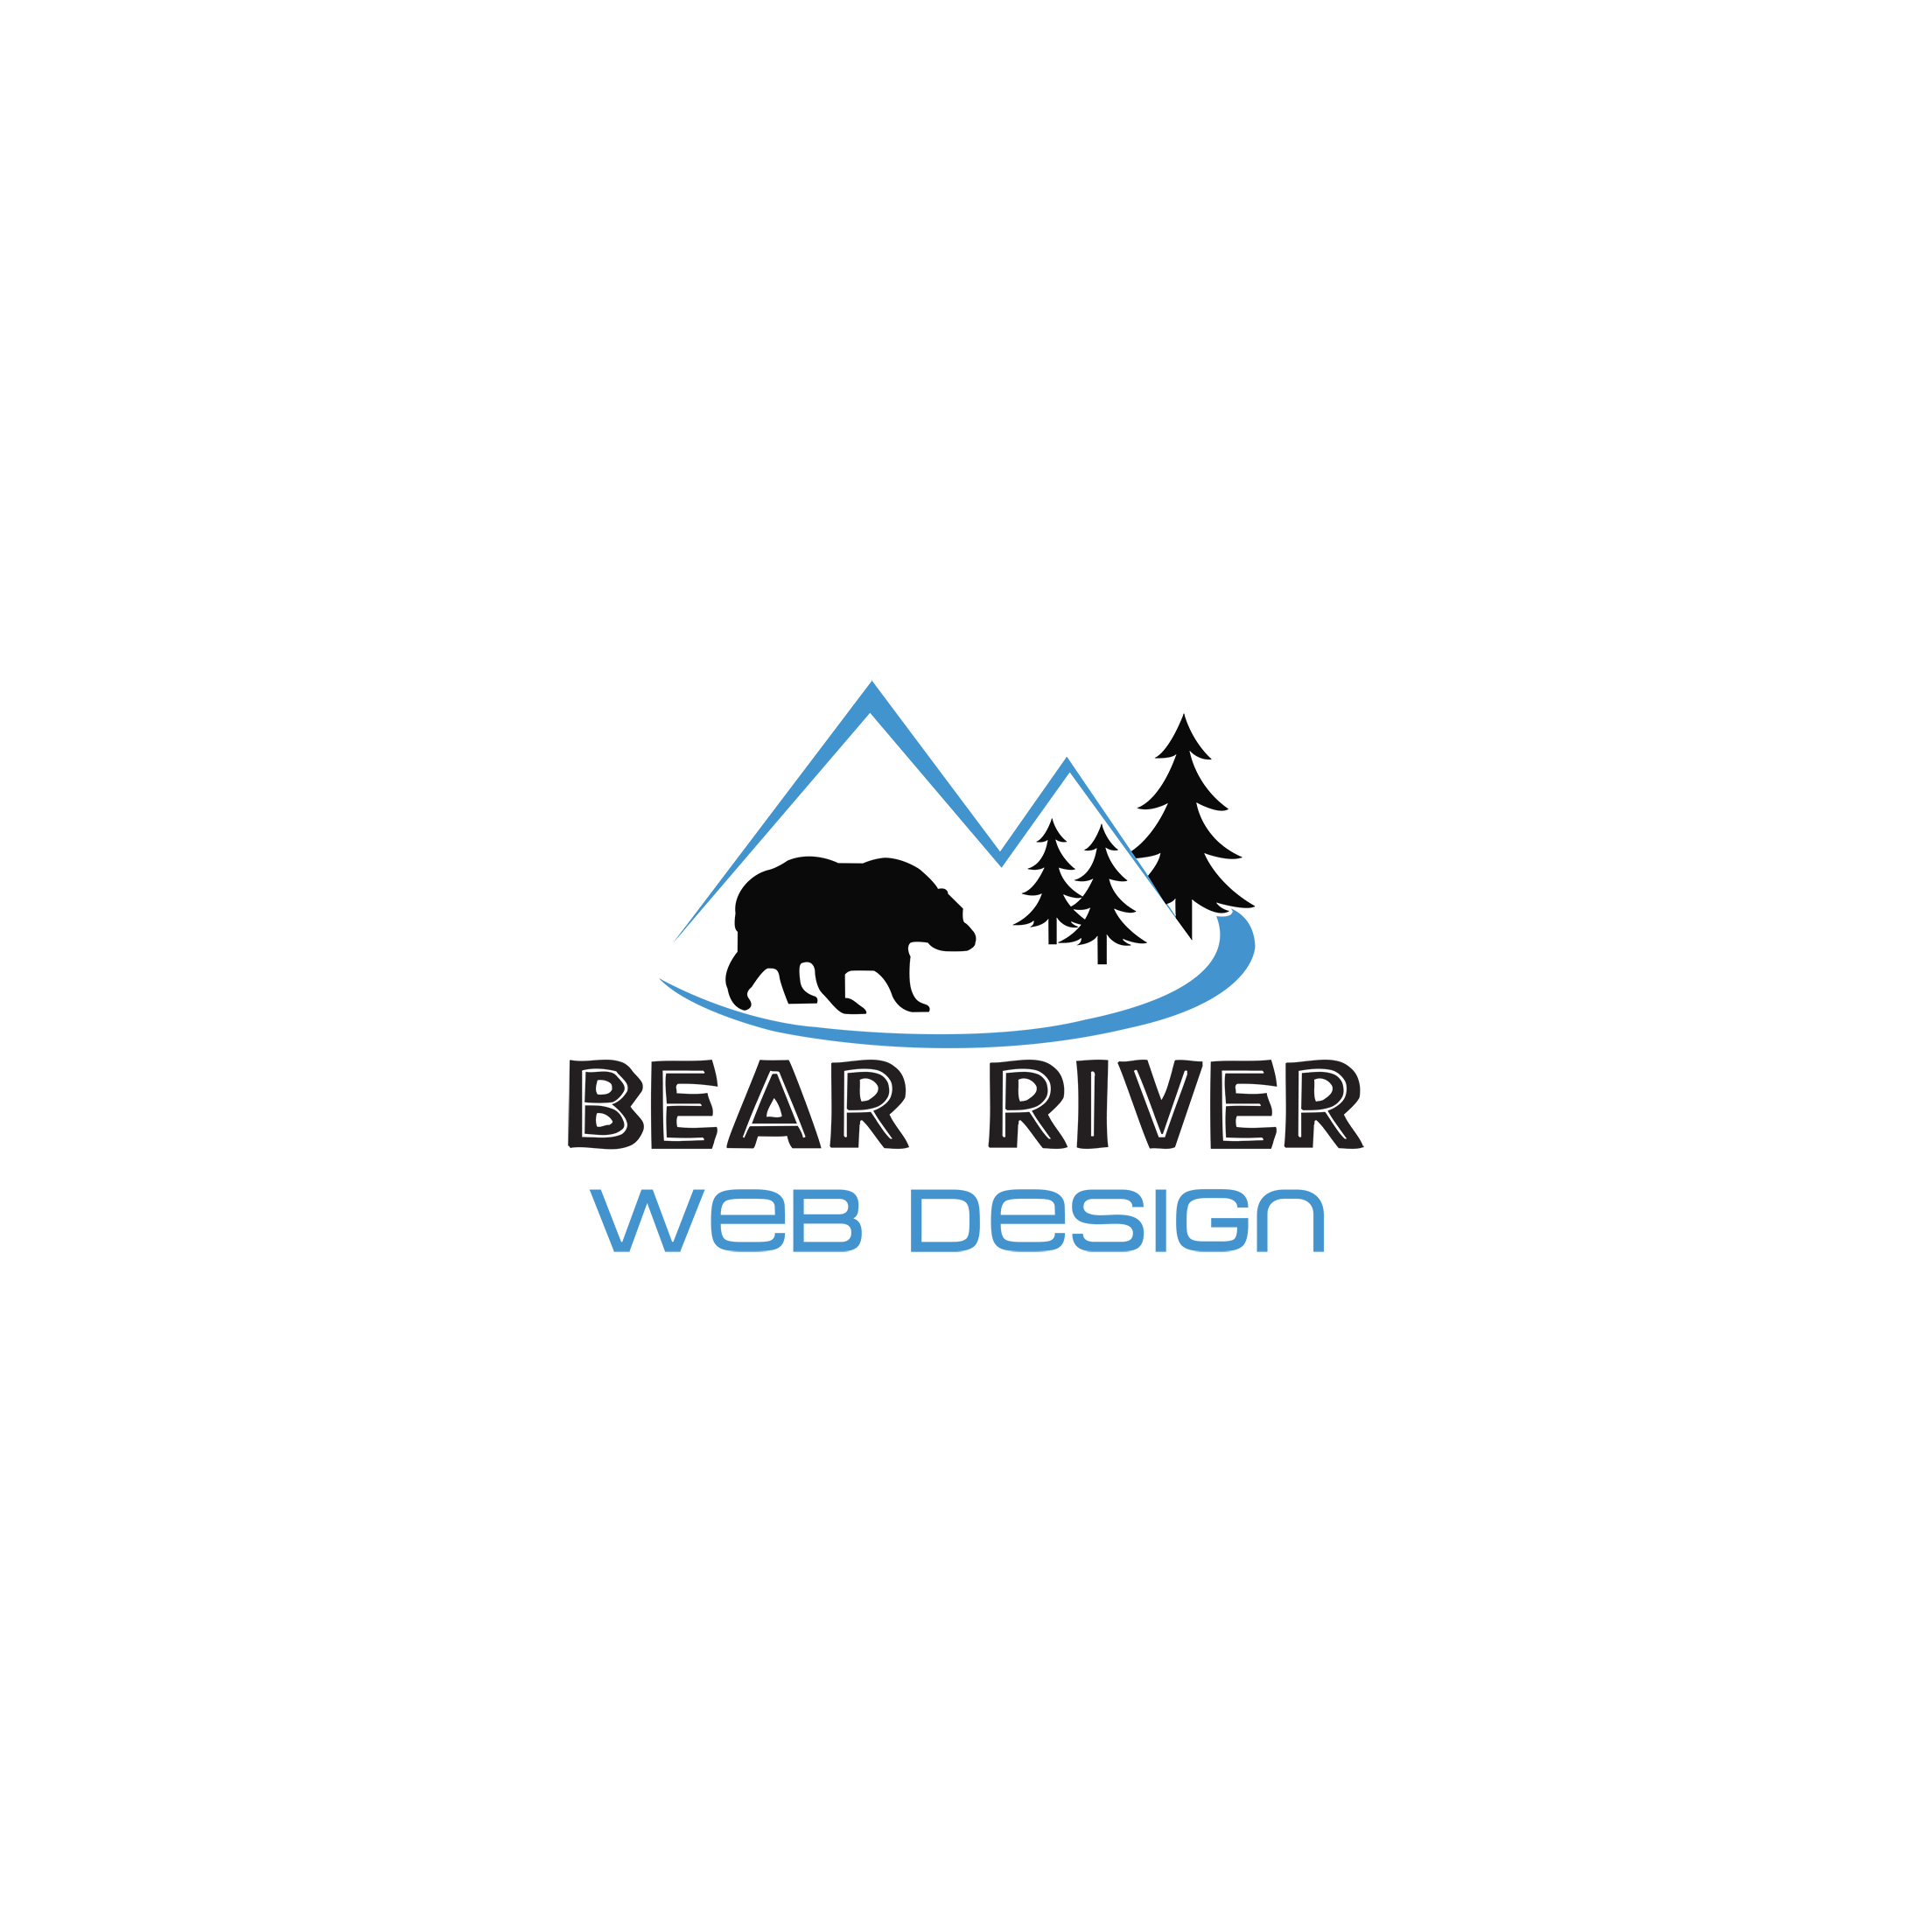 Bear River Web Design